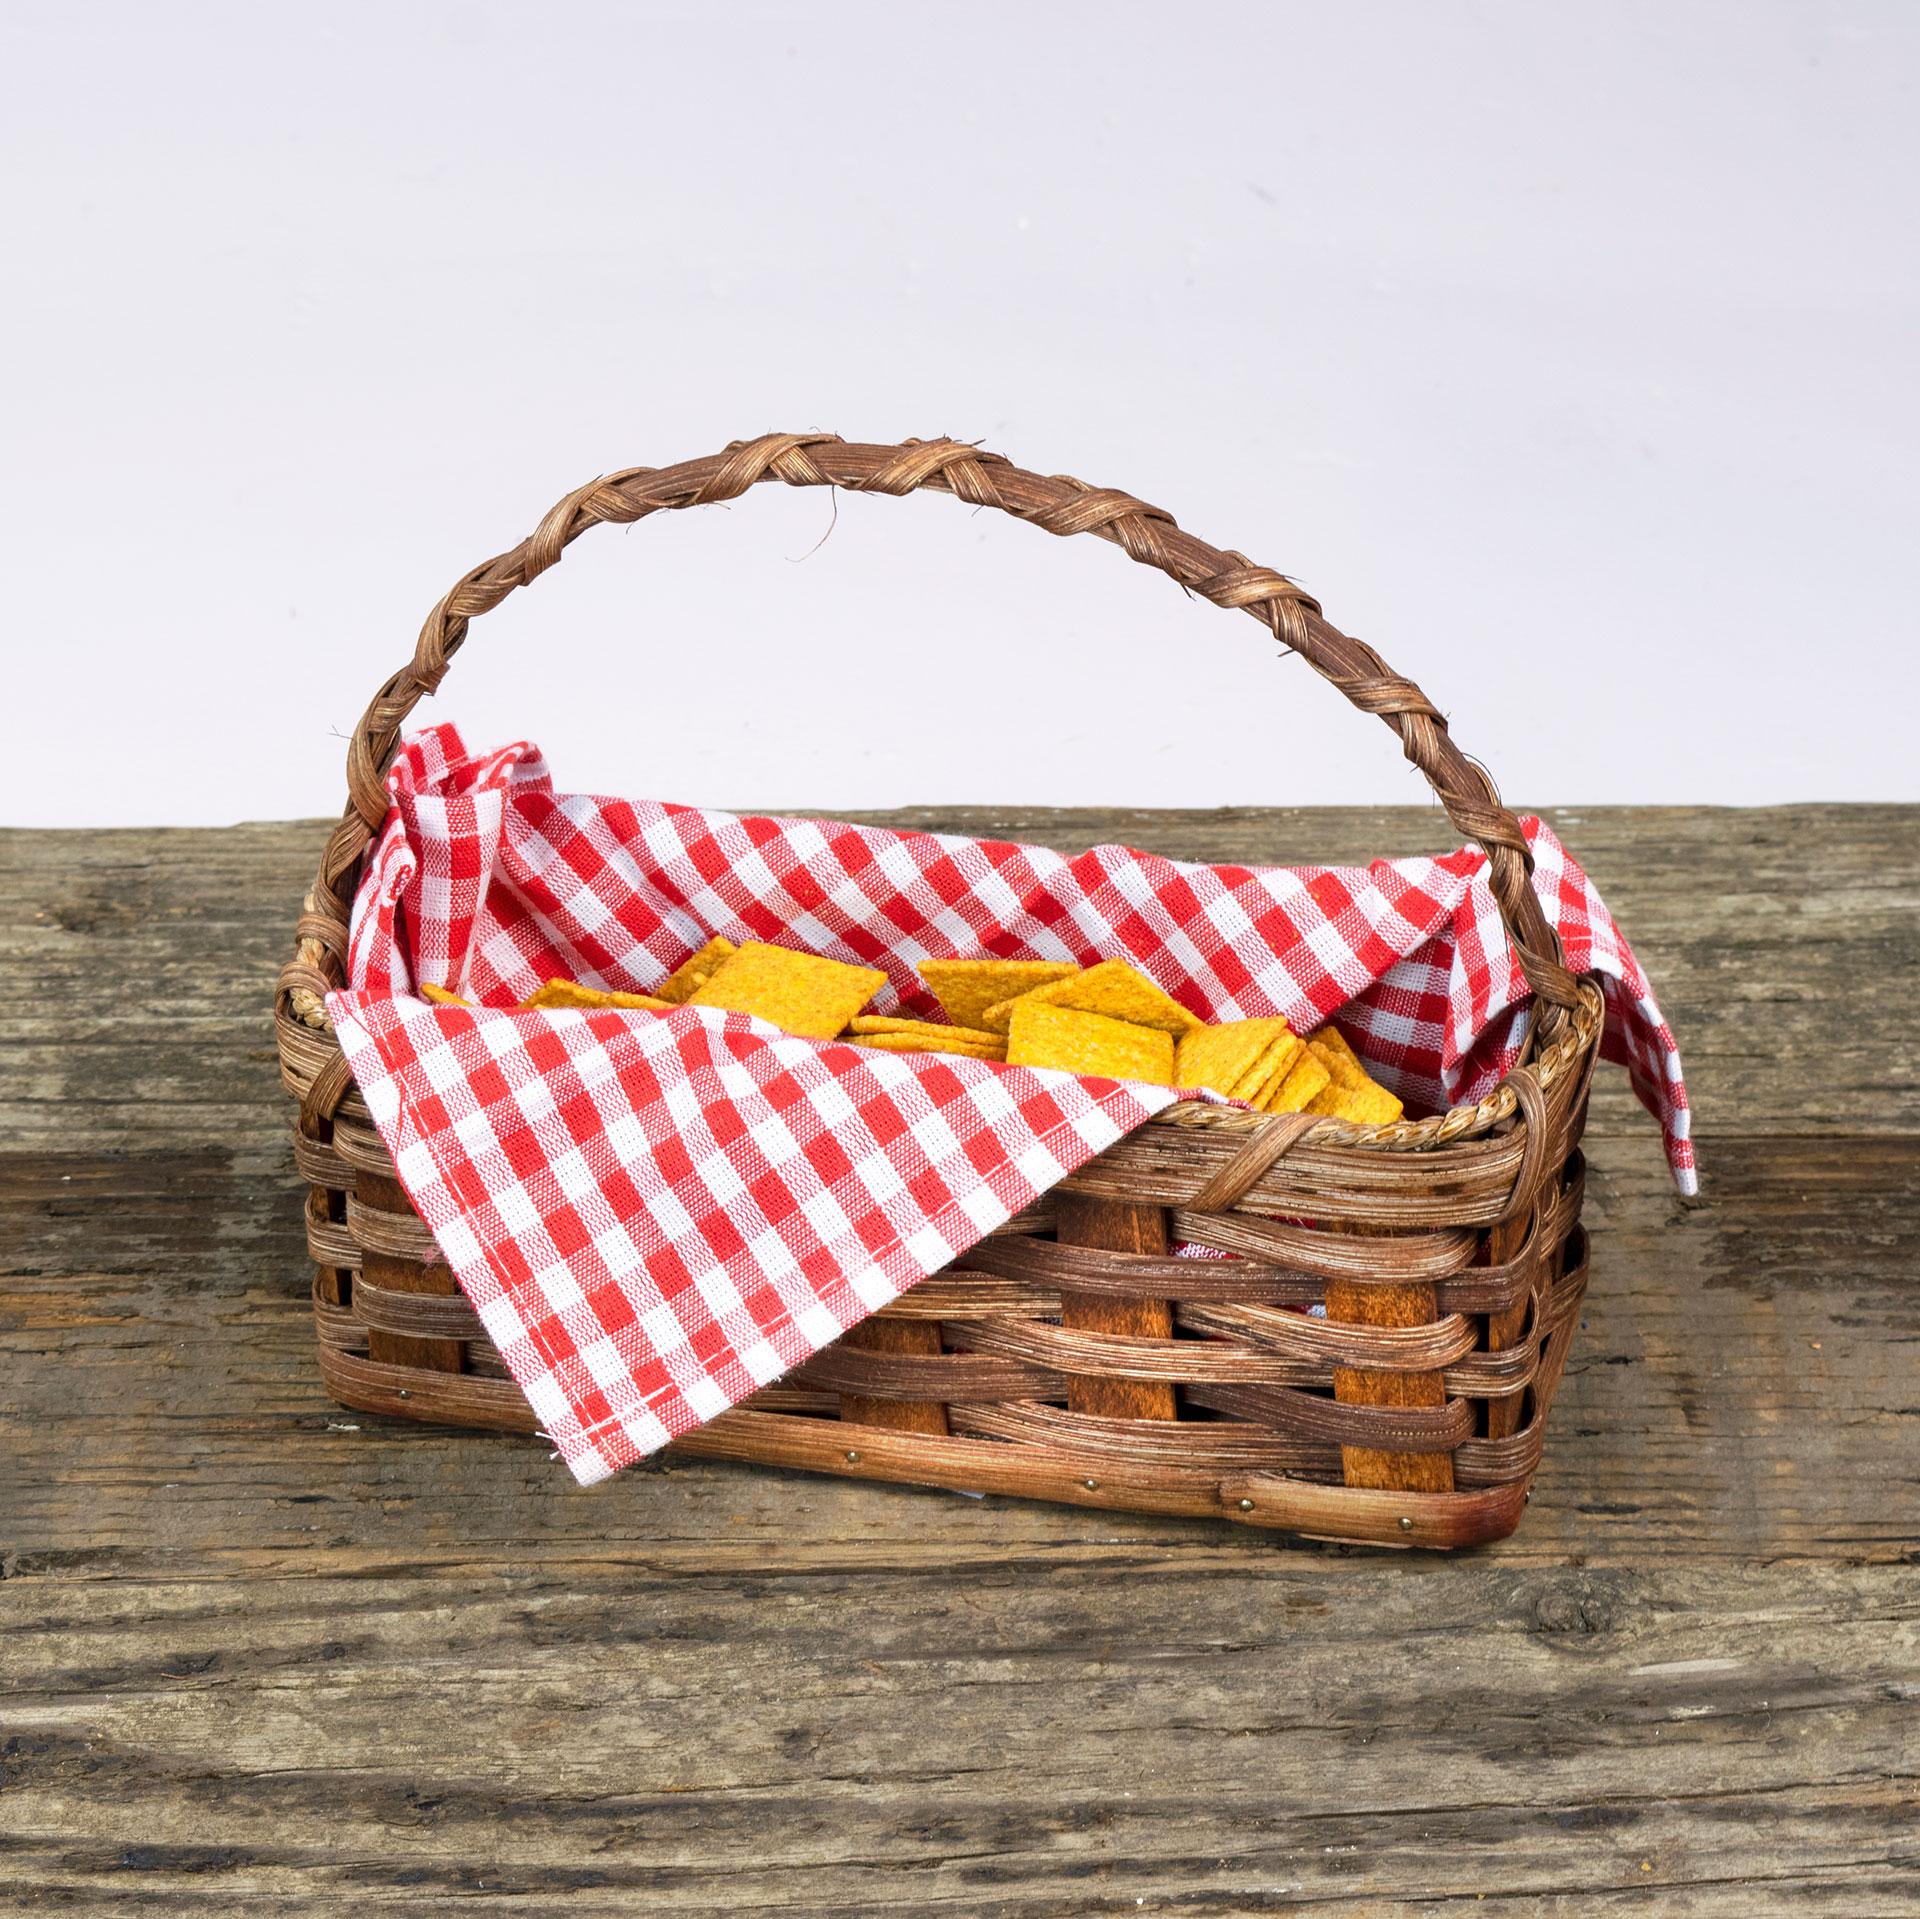 basket with handle